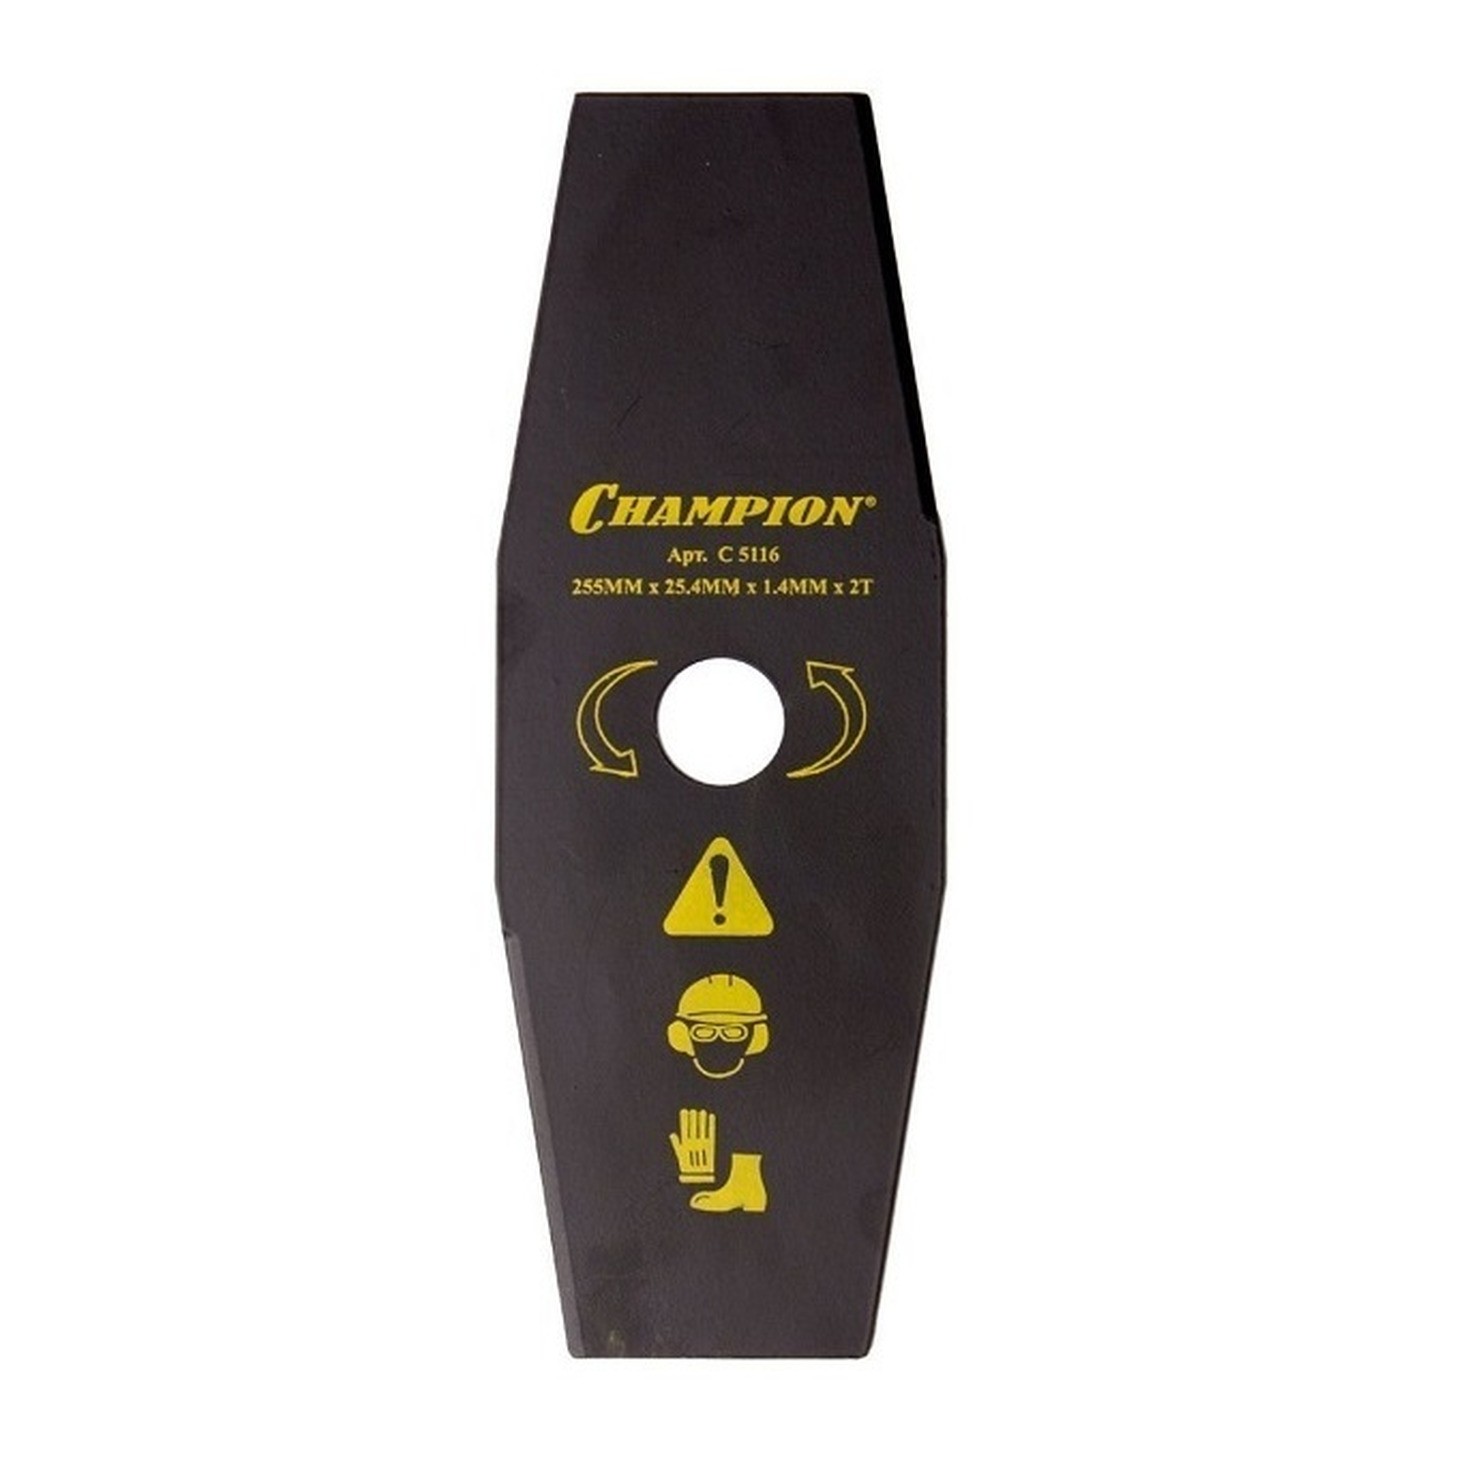 Нож Champion для жесткой травы 2/255/25,4 C5116 champion нож champion для жесткой травы 2 255 20 c5117